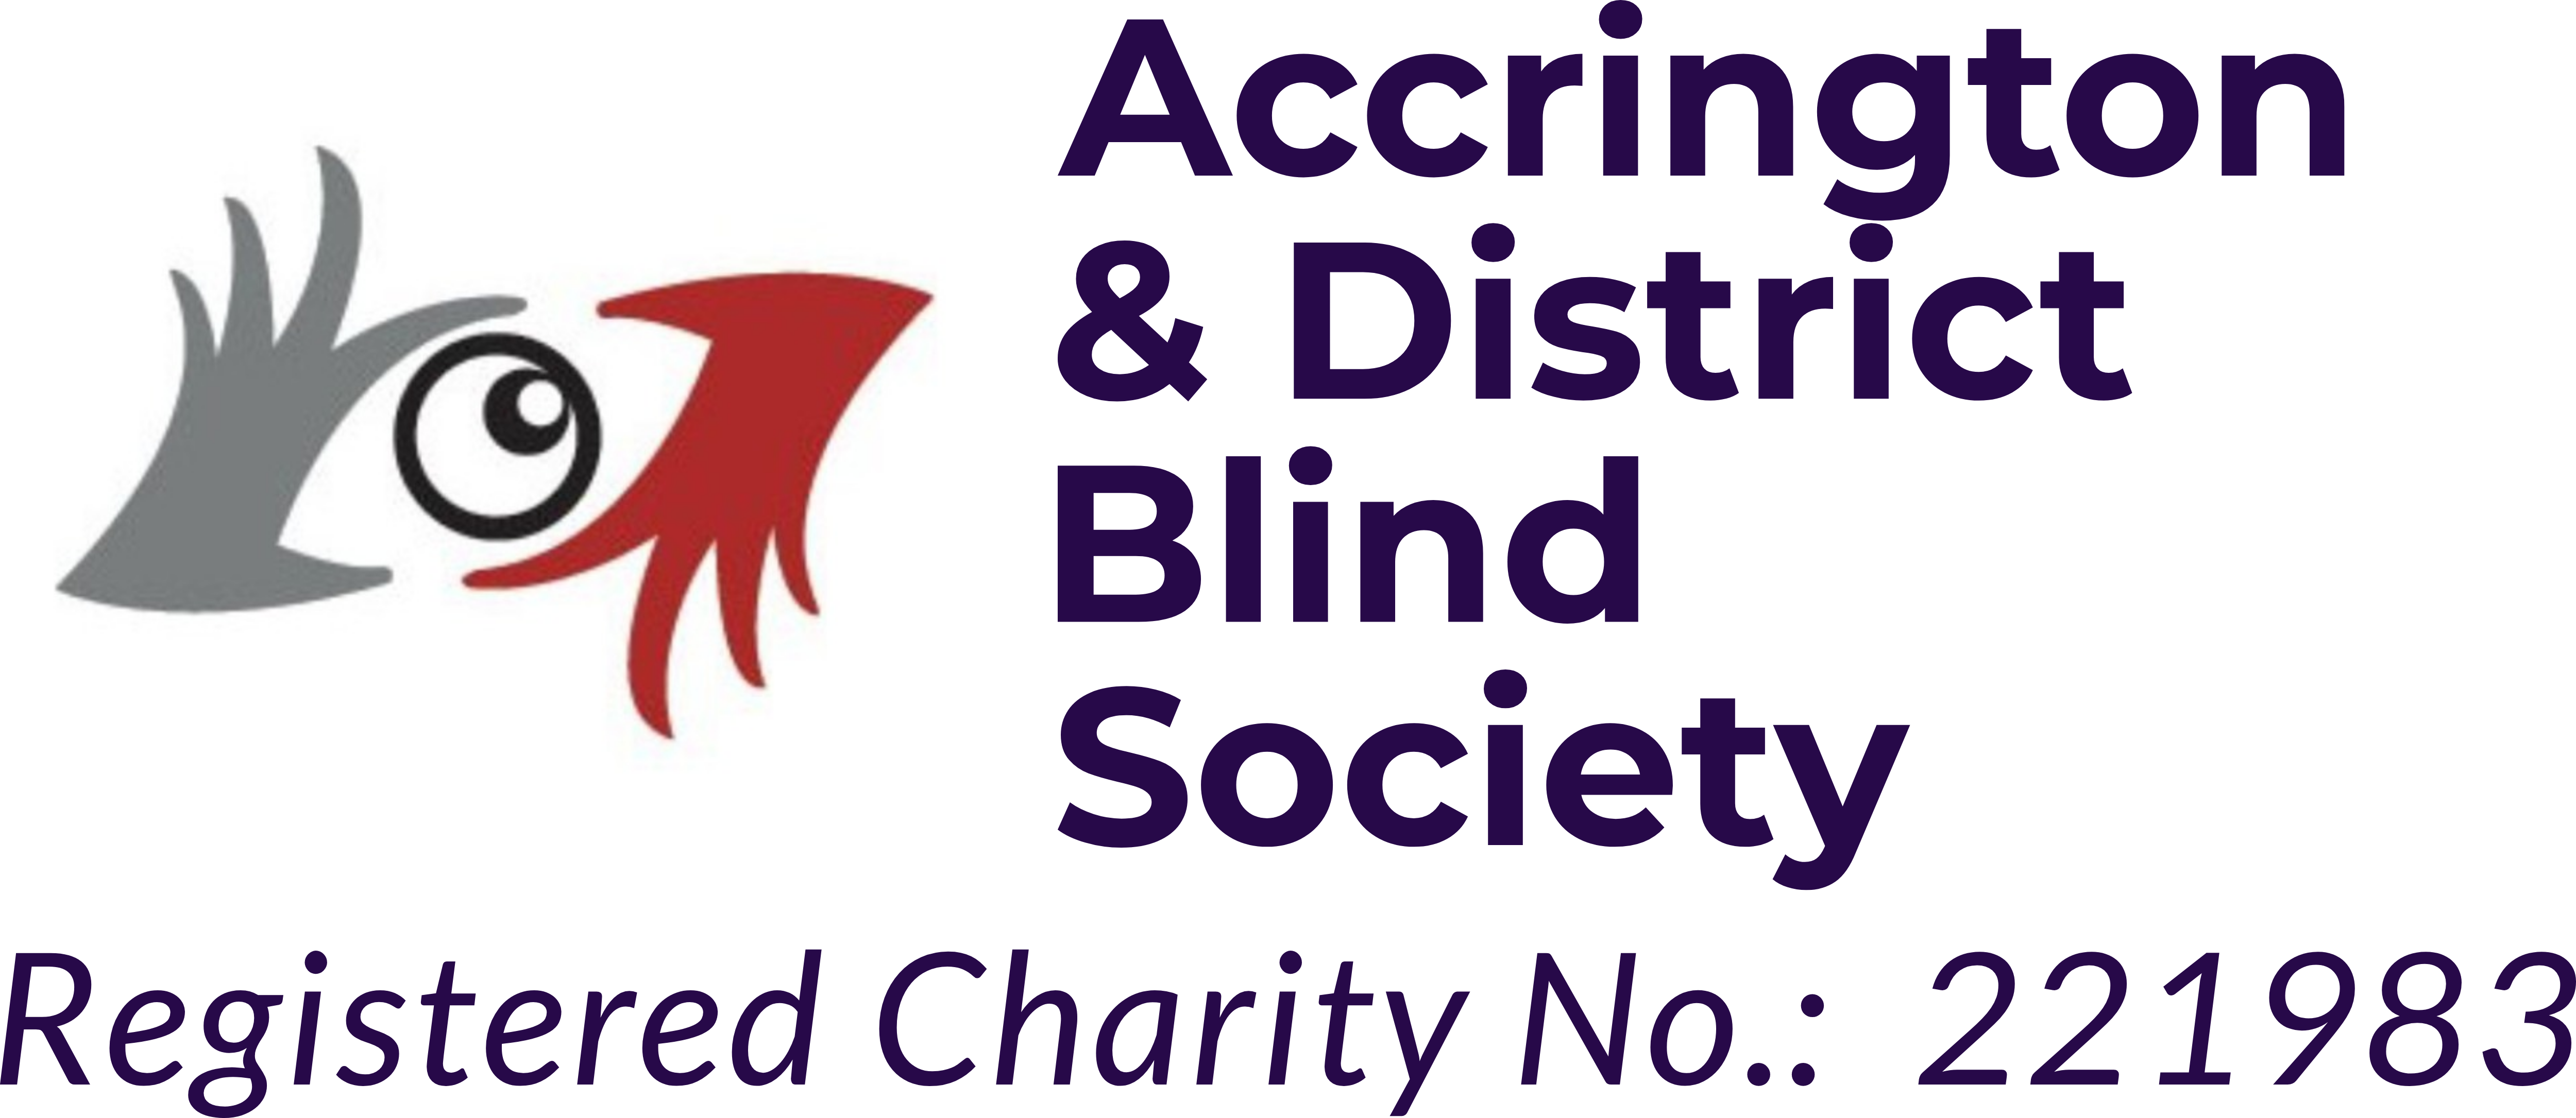 Accrington & District Blind Society Logo